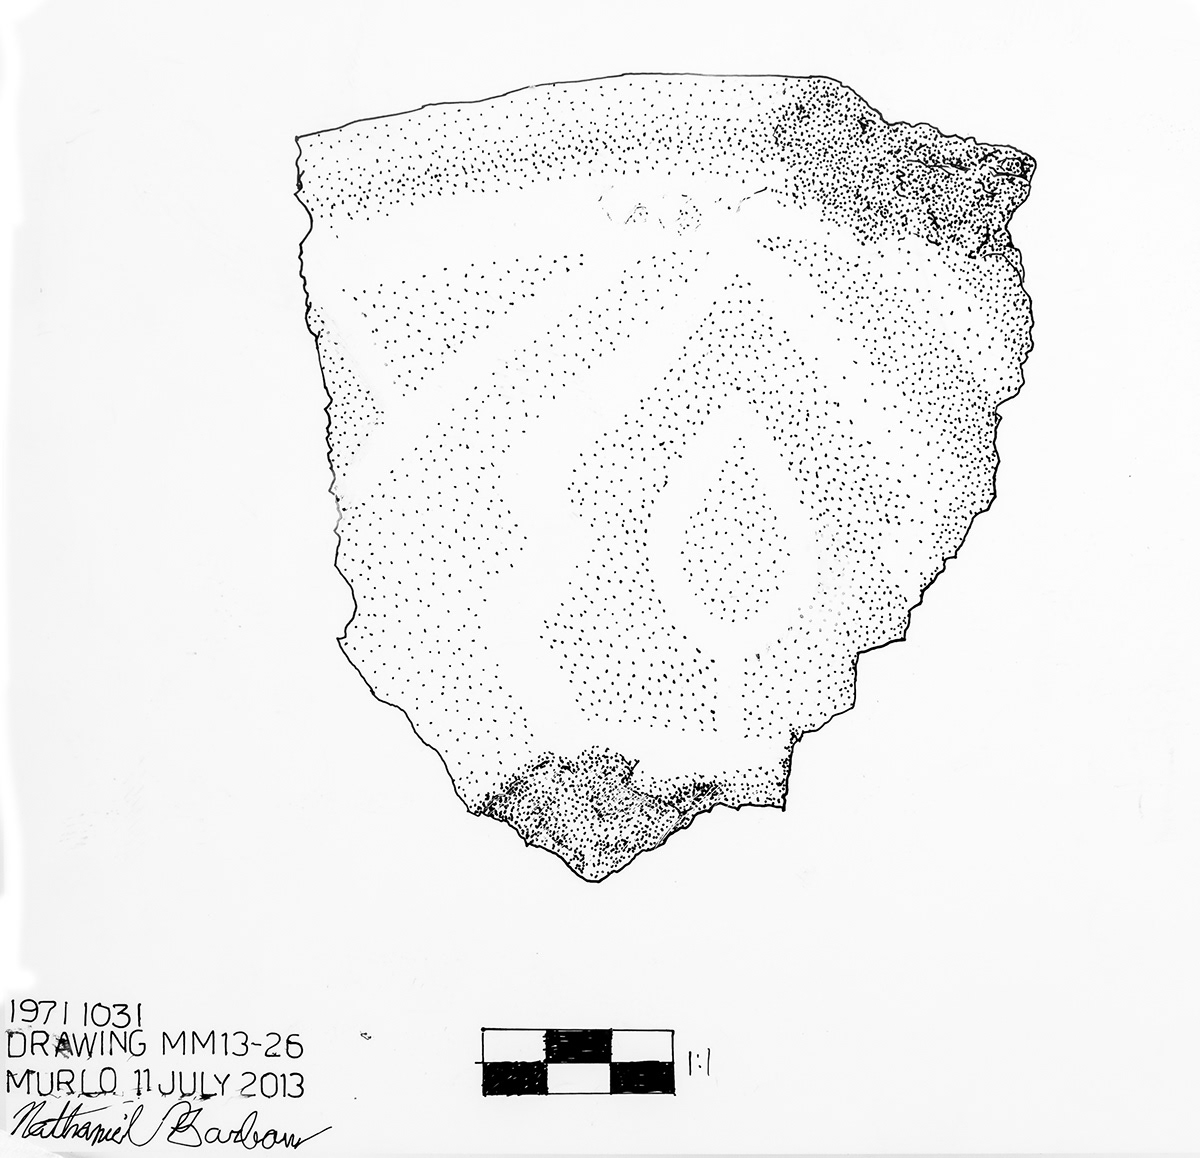 archaeology archaeological nathaniel Barlam Poggio Civitate funnels